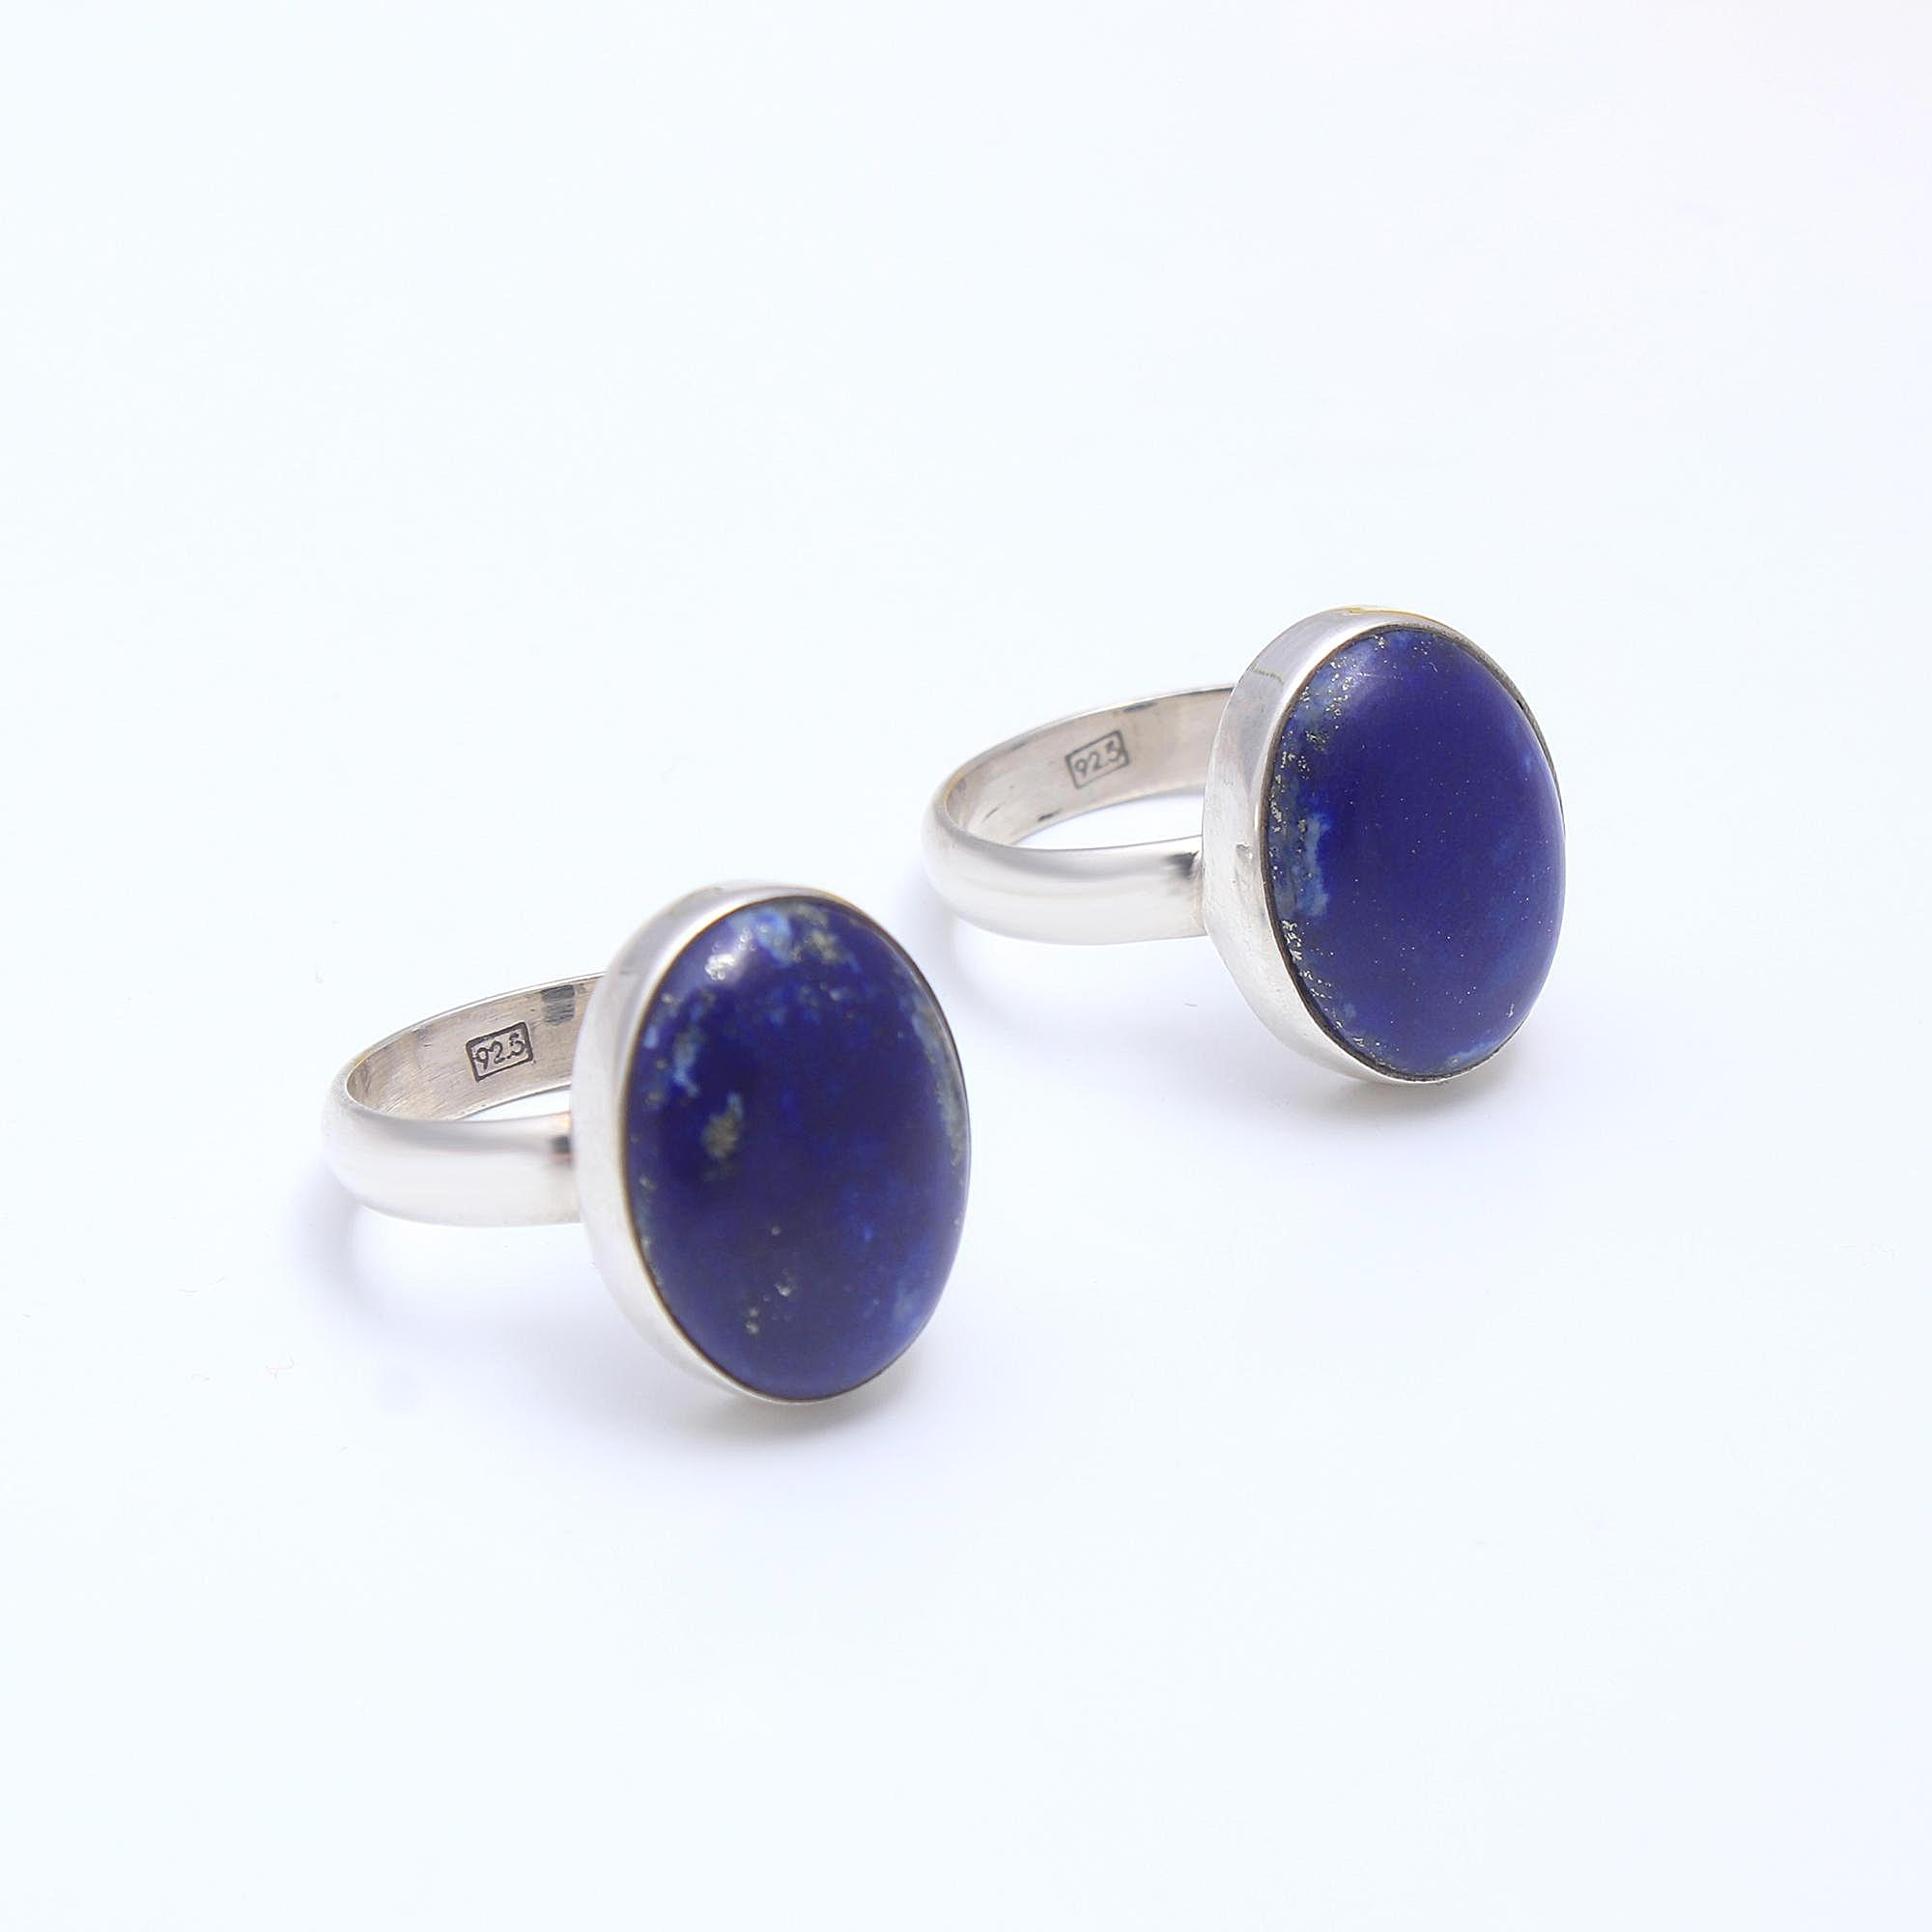 925 Sterling Silver Lapis Lazuli Fashion Jewelry Adjustable Ring 2Pcs 58Cts 16x11 mm#1040